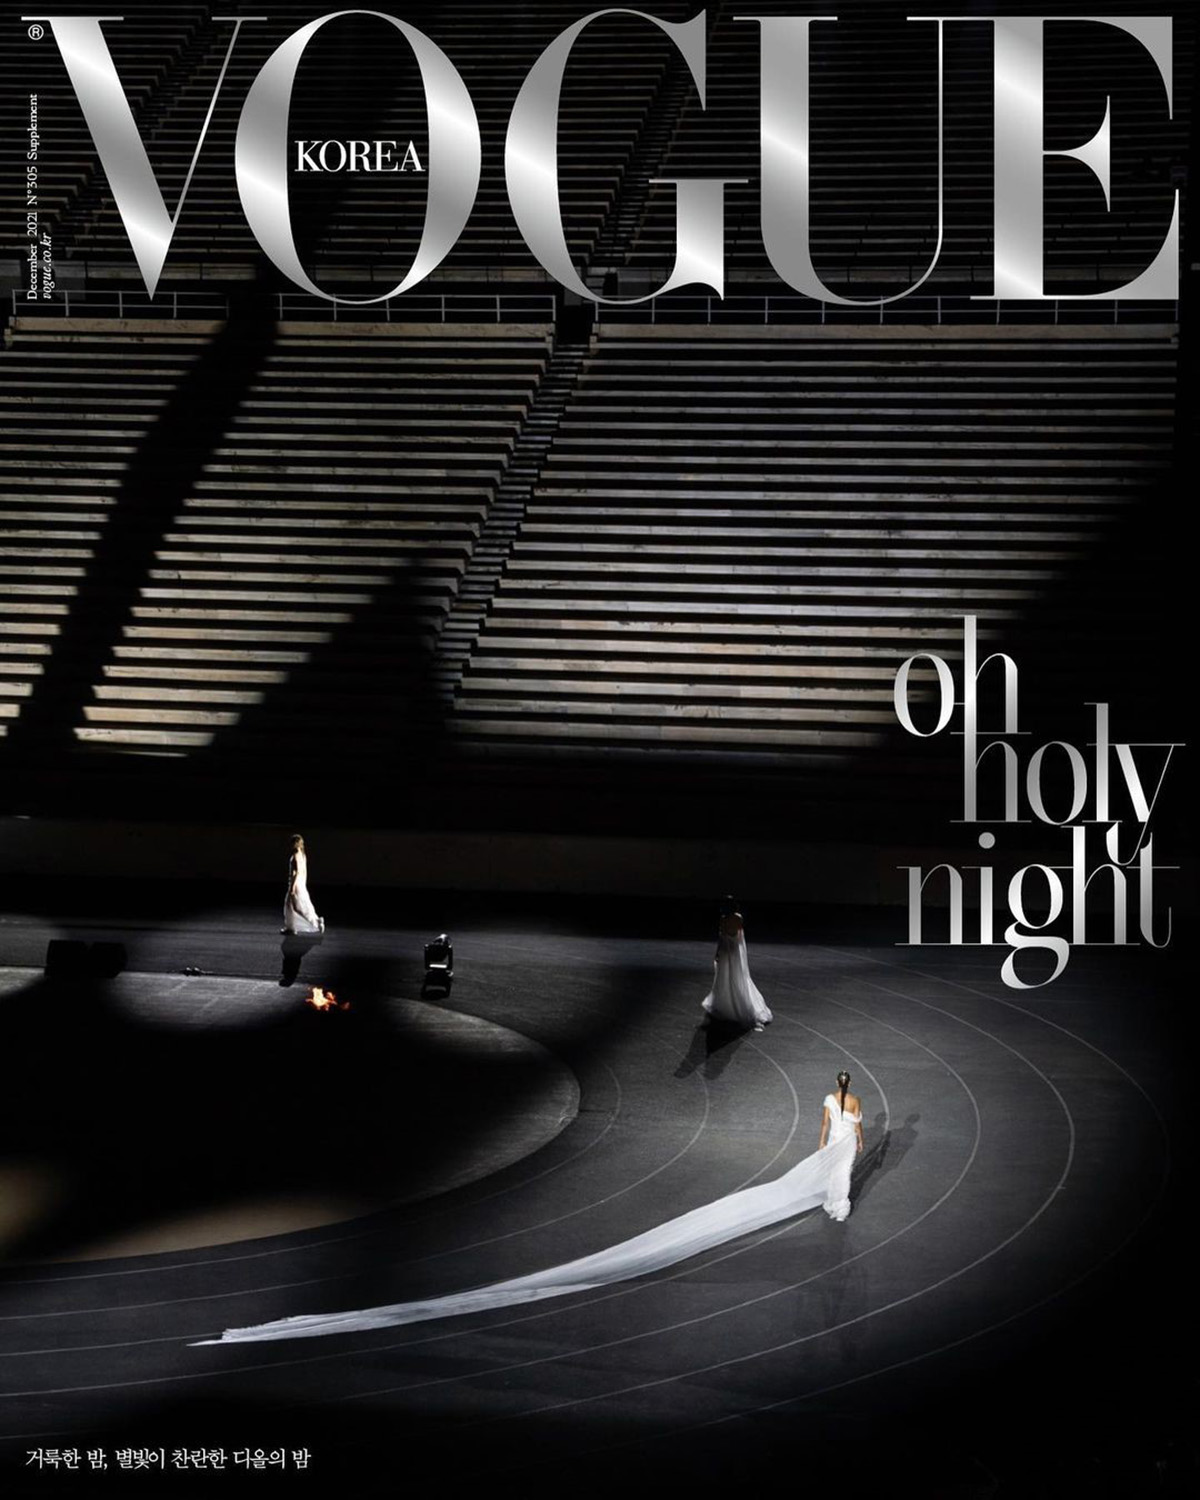 Vogue Korea December 2021 covers by Cho Giseok